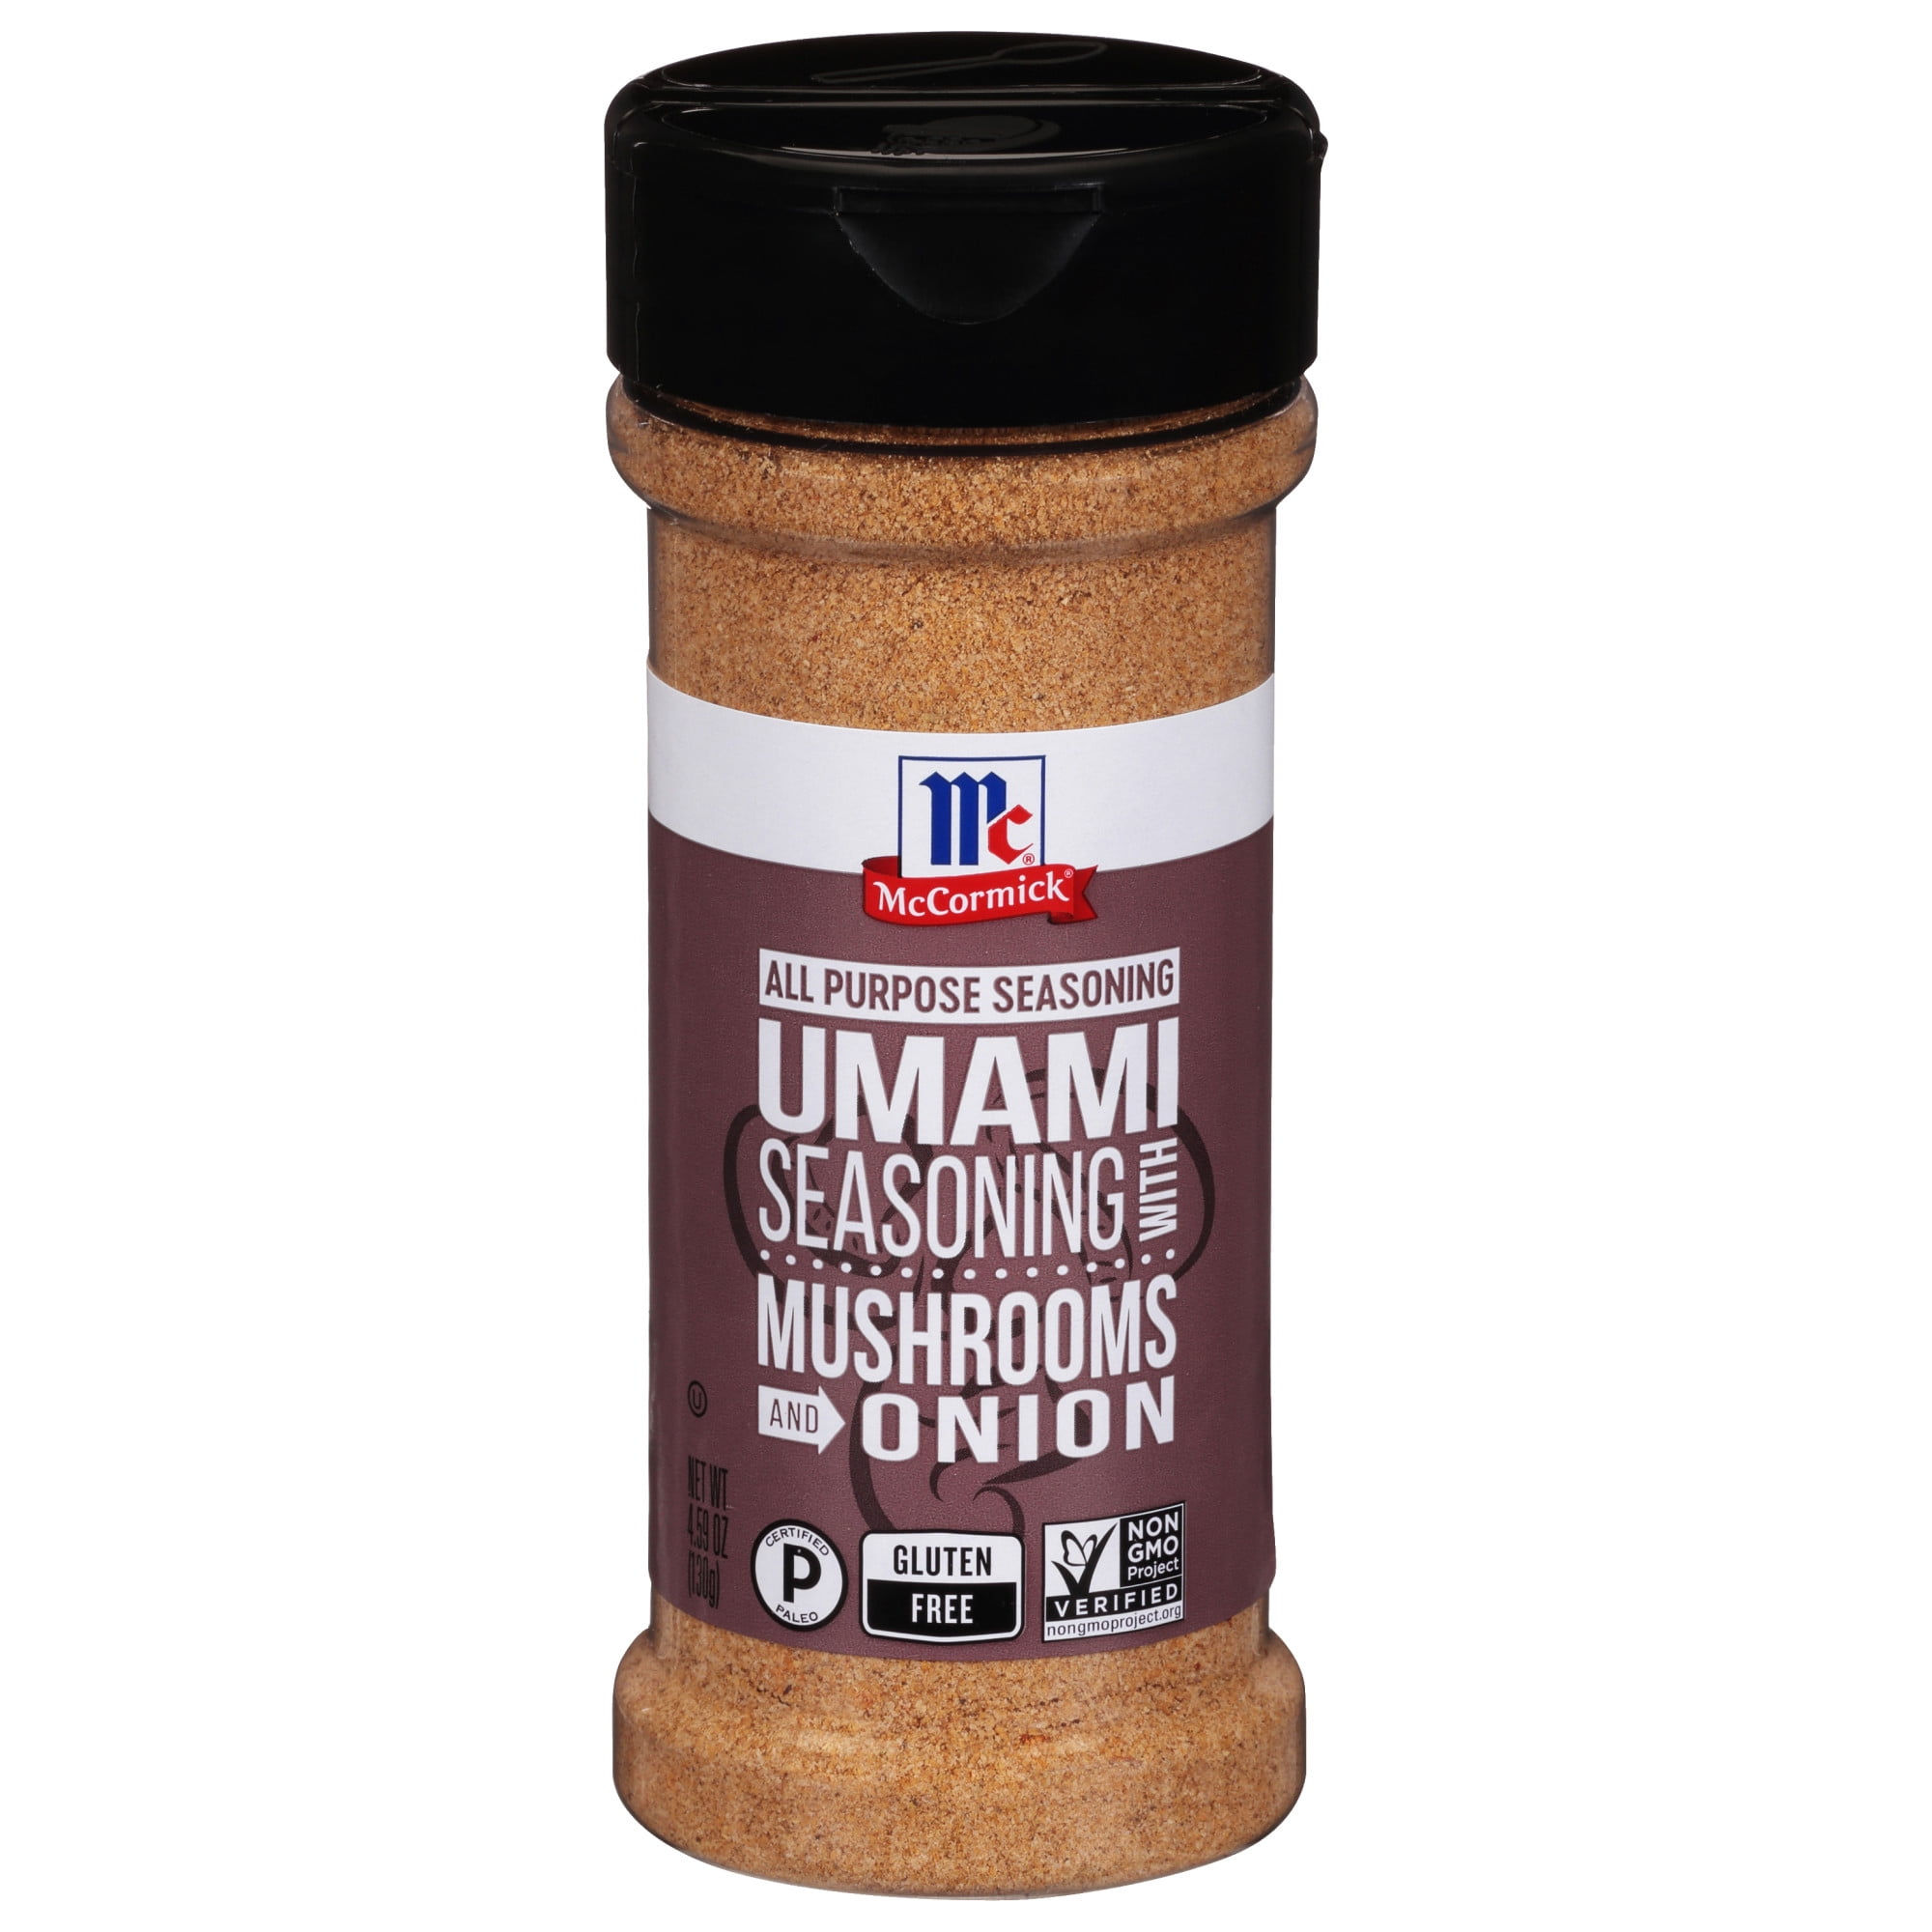 McCormick Umami Seasoning with Mushrooms and Onion All Purpose